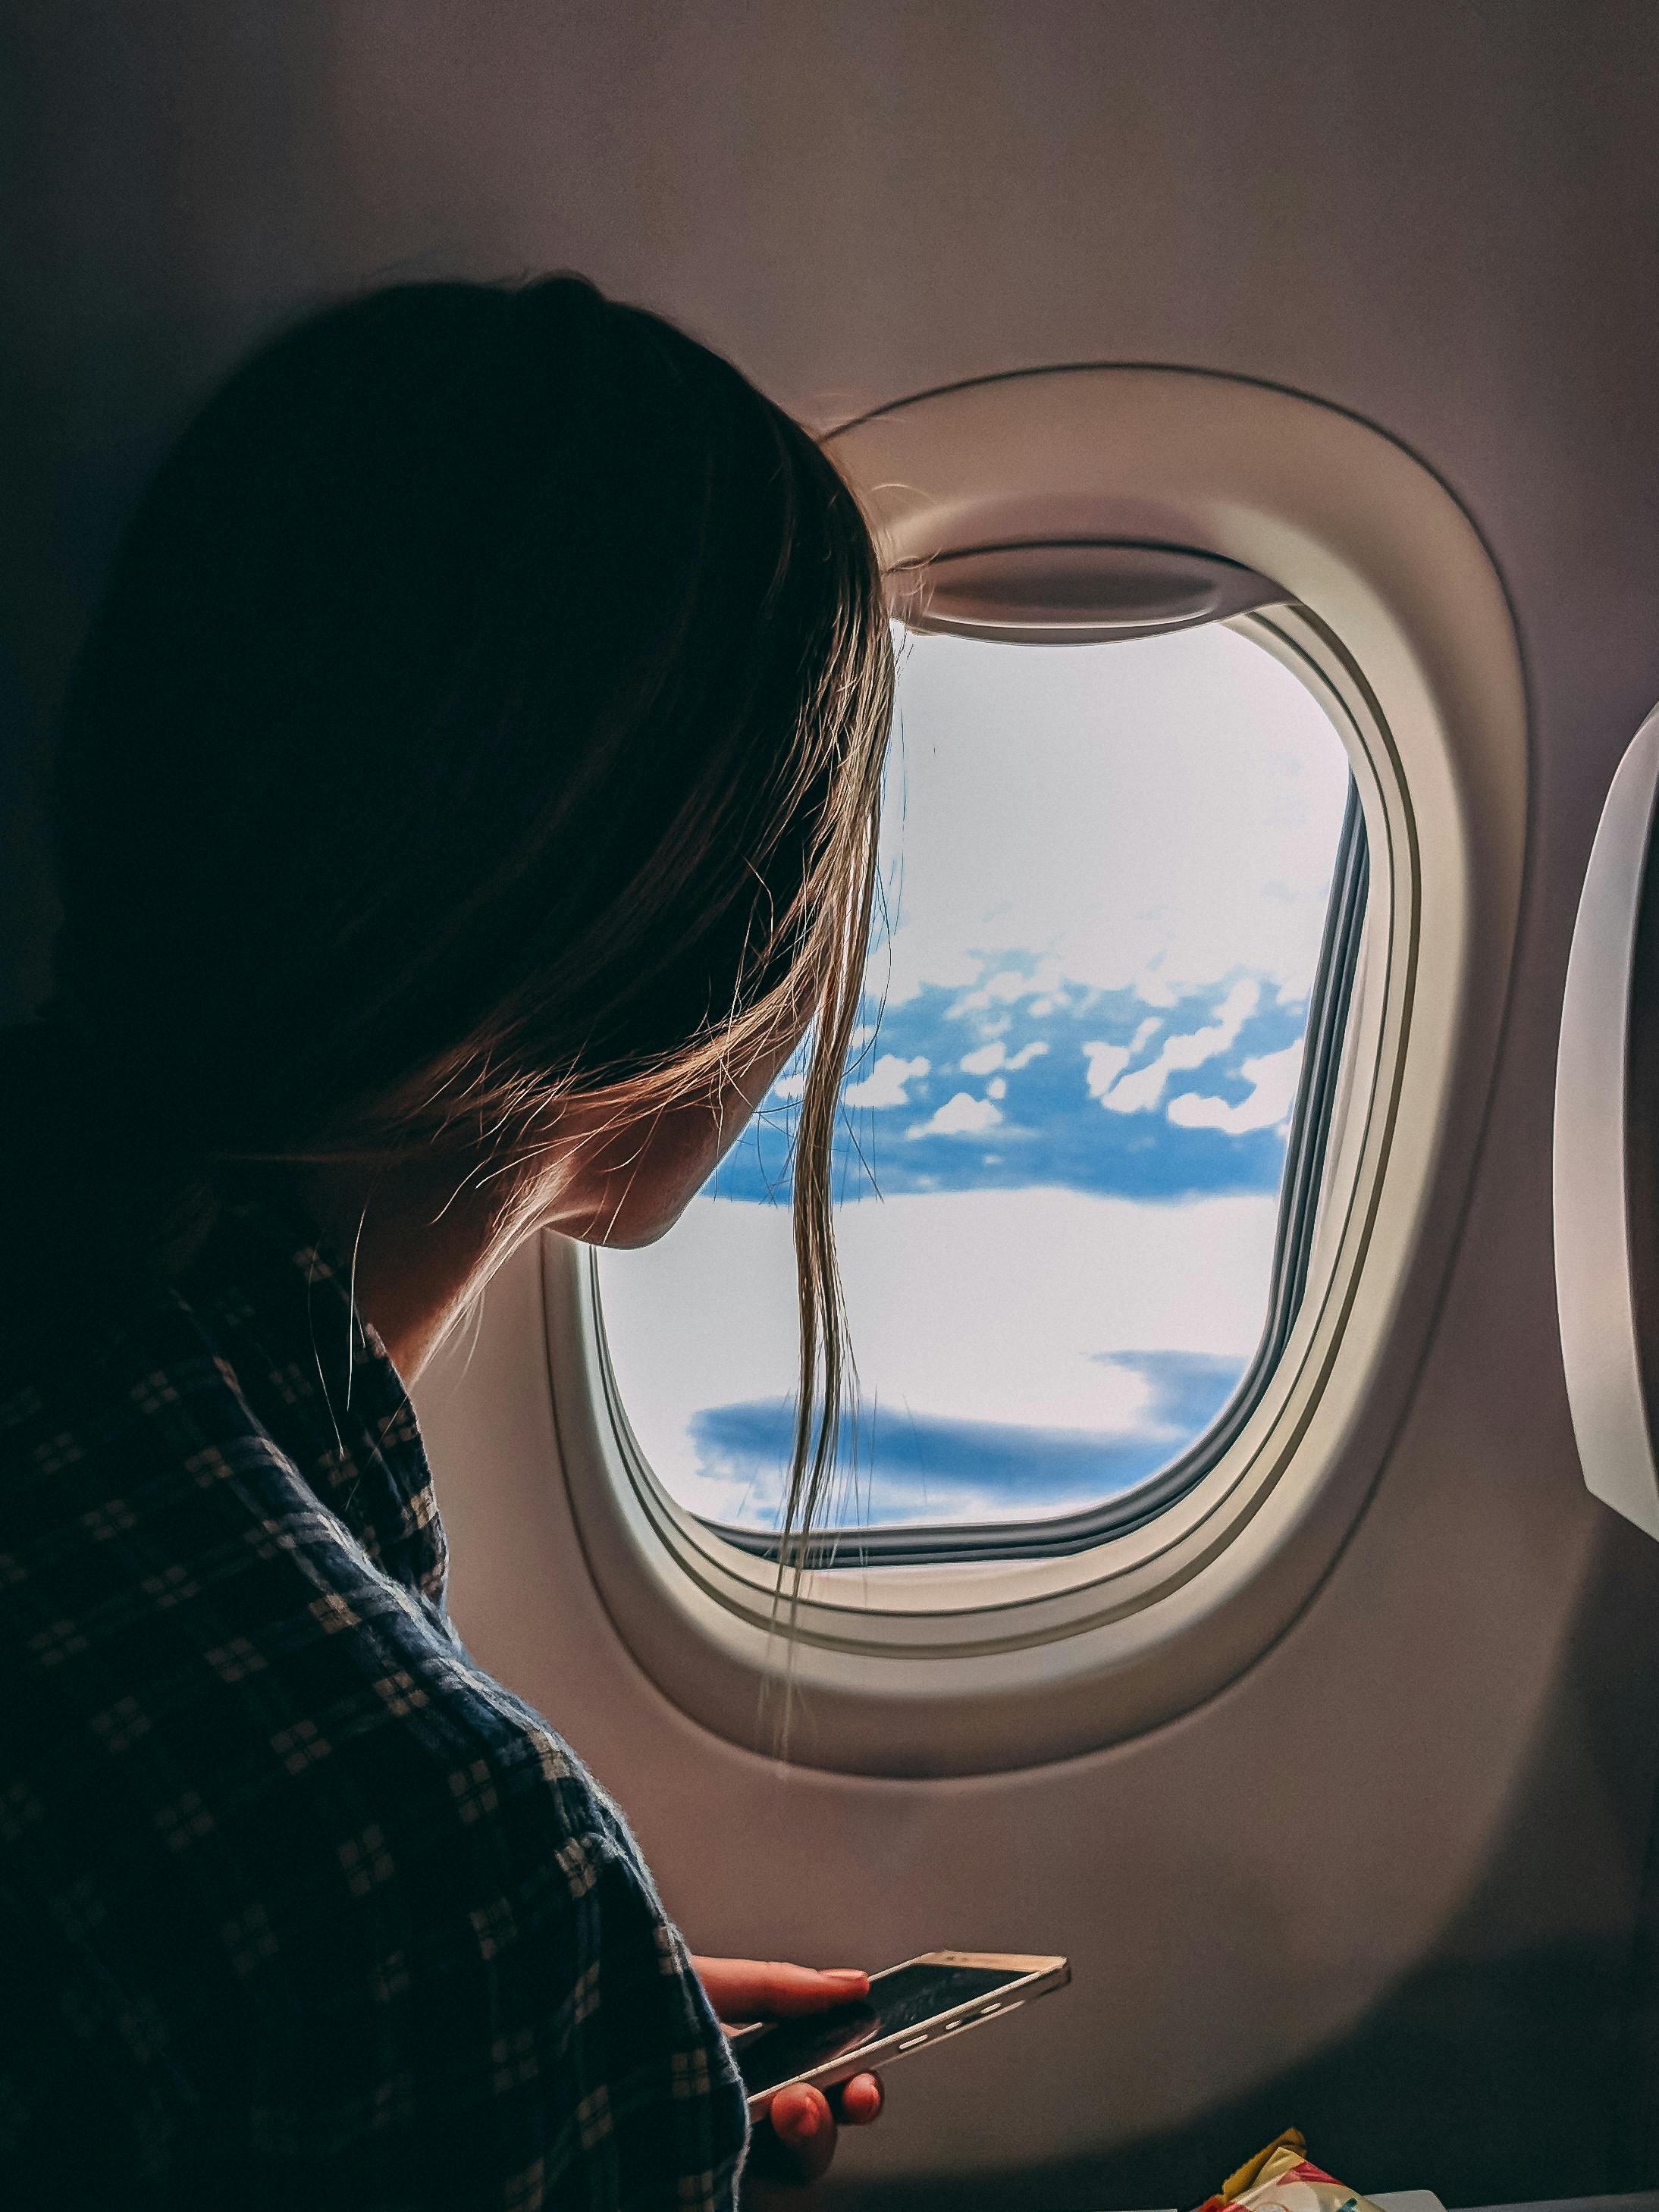 A woman on a plane | Source: Pexels